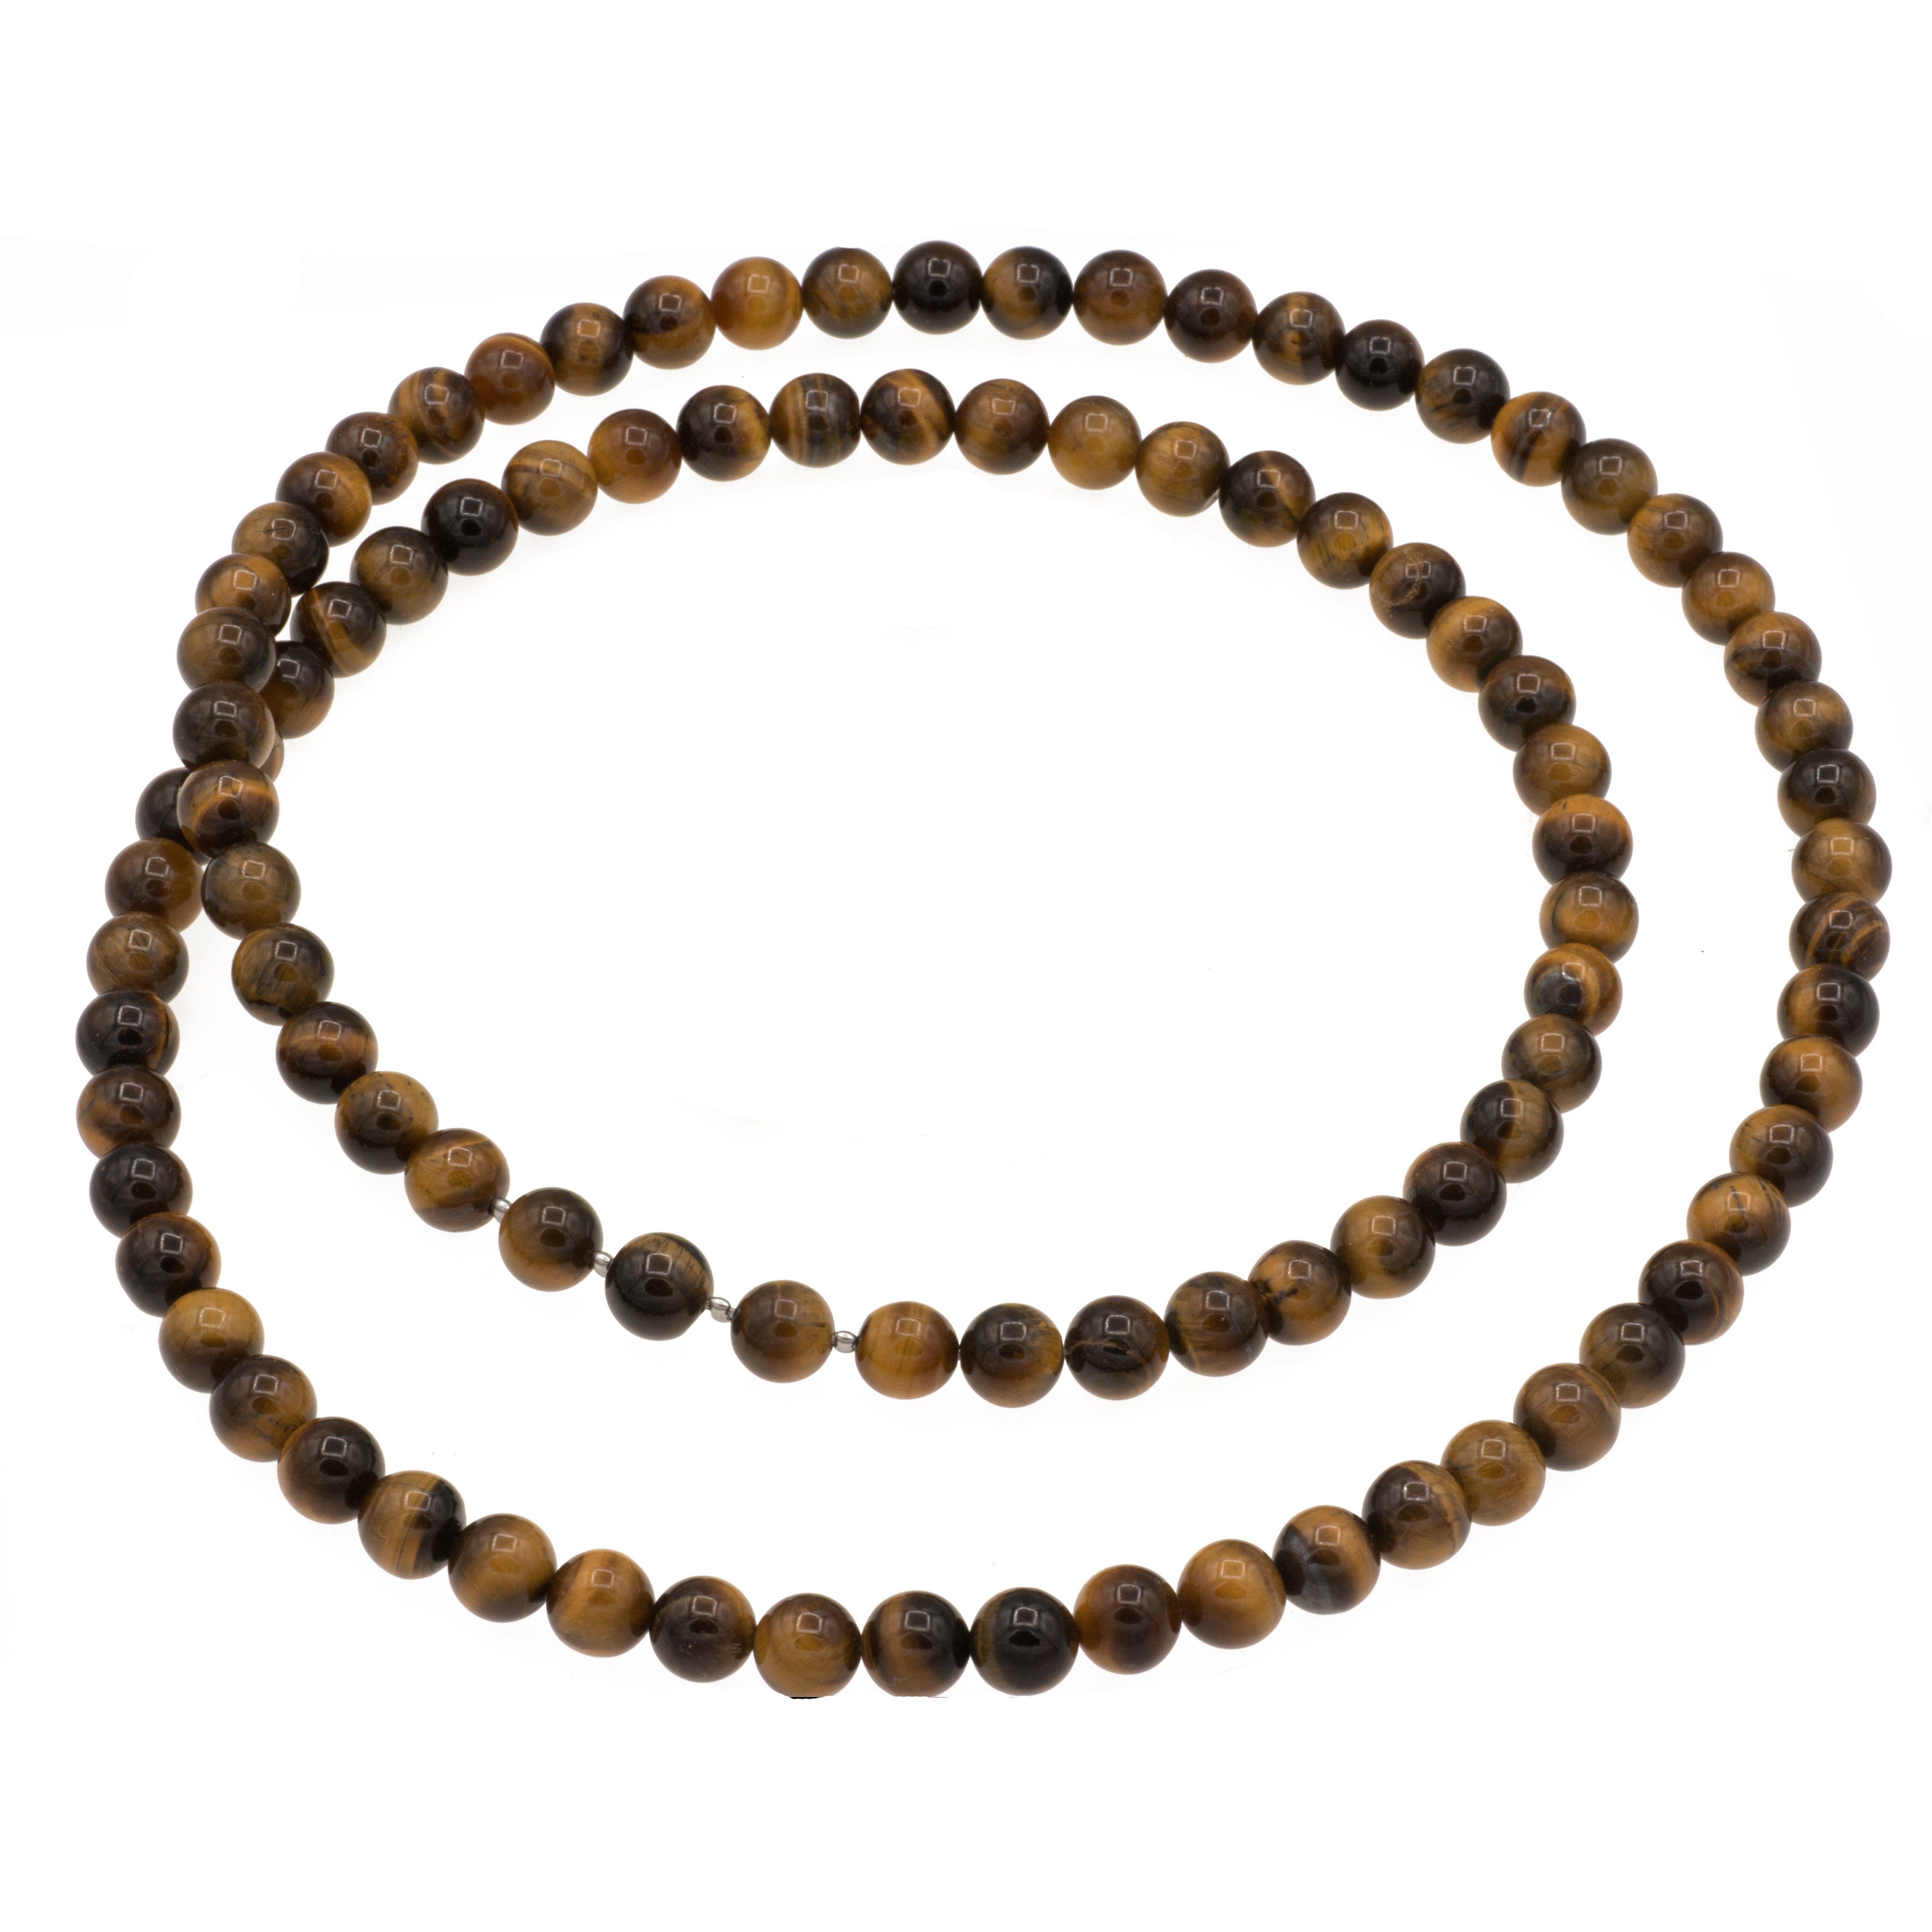 Bella Carina Perlenkette Kette aus Tigerauge Perlen 8 mm 80 cm Länge  geschlossen, lange Kette ohne Verschluss